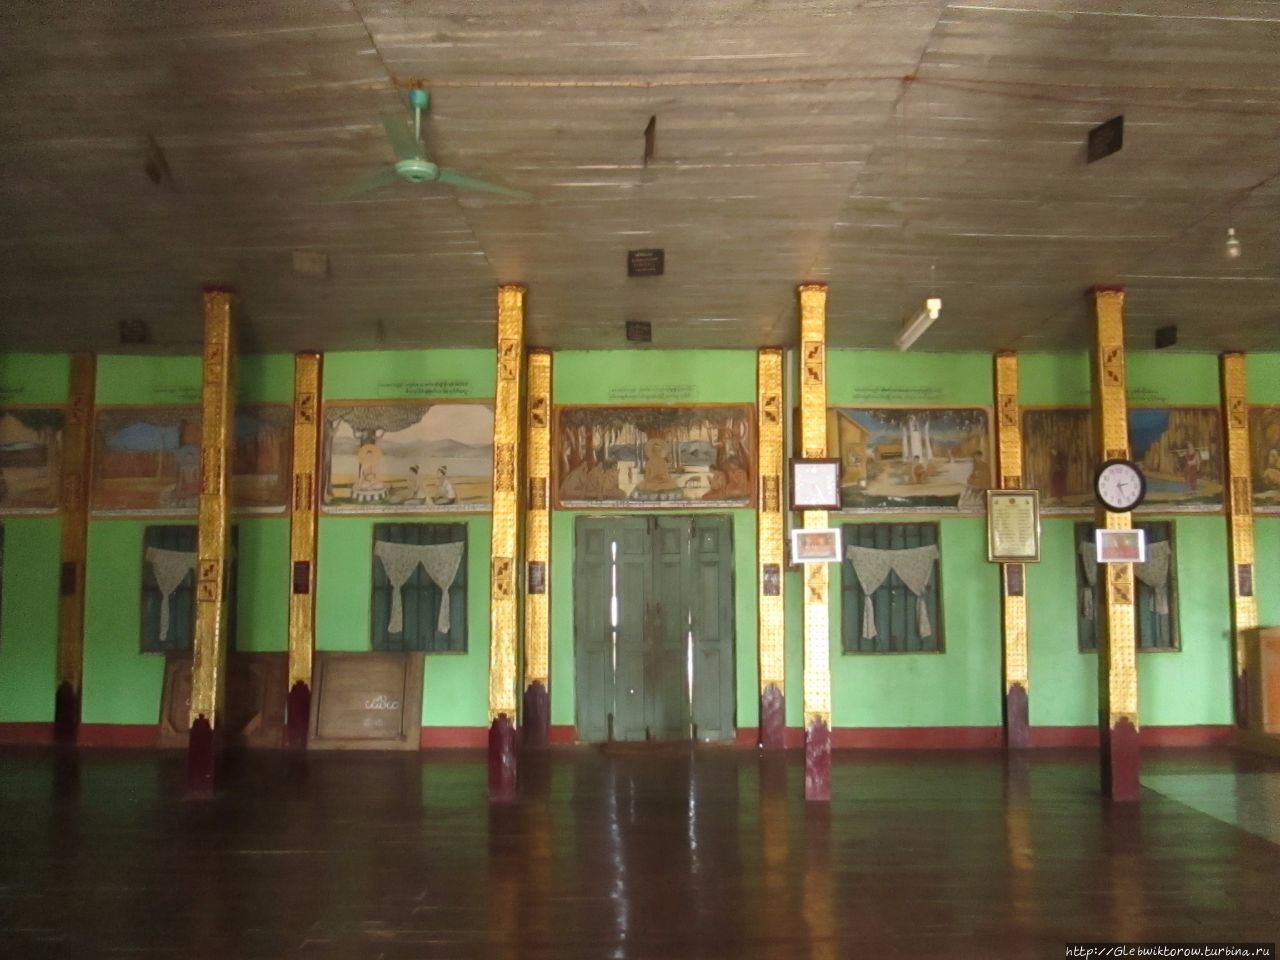 Golden Budda Temple Сипо, Мьянма